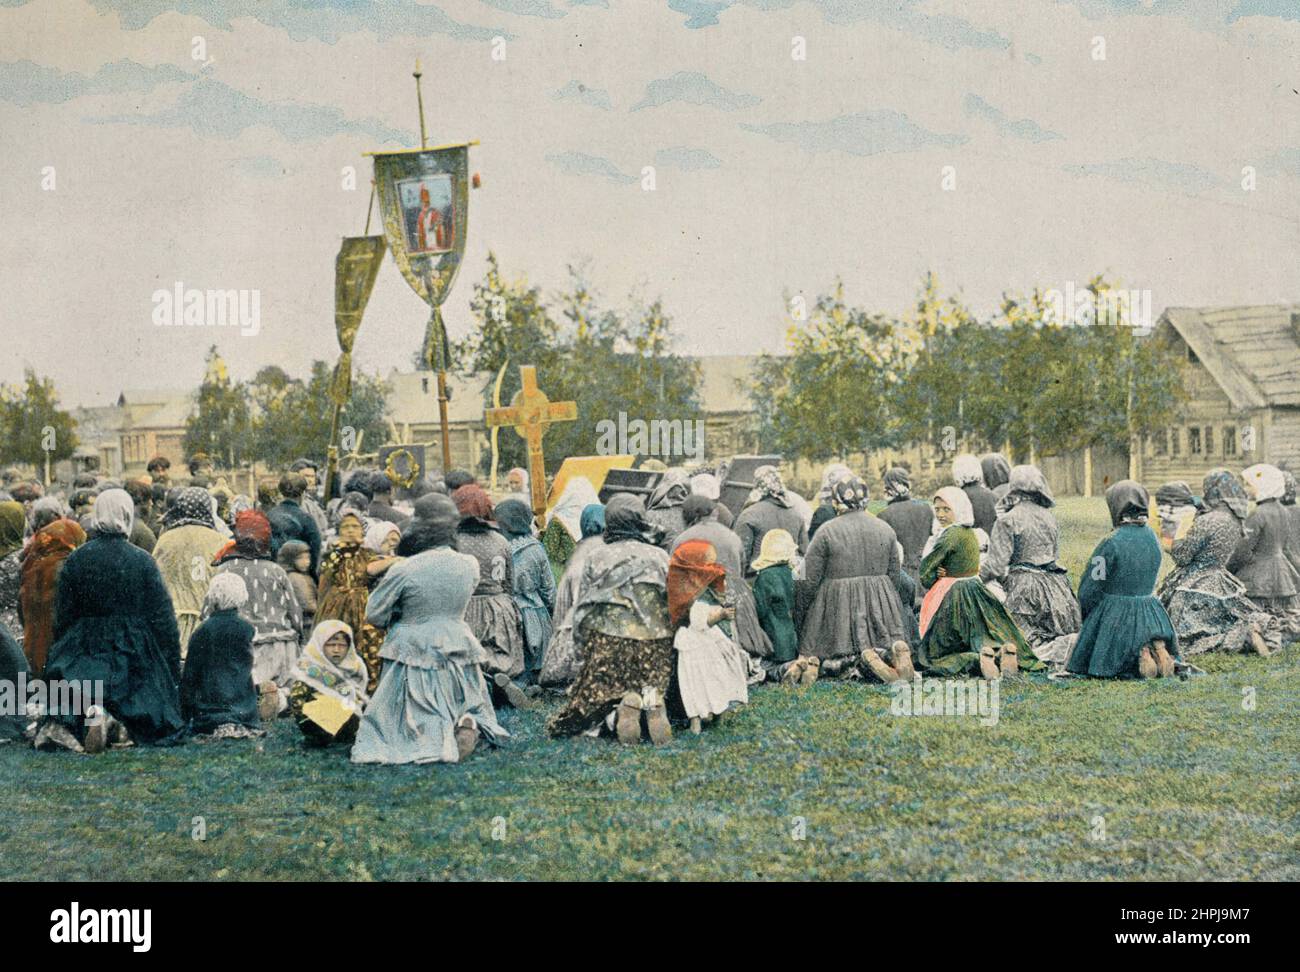 PROCESSION AU VILLAGE. Autour Du Monde Russie 1895 - 1900 Costumes Coutumes  (2)  - 19 th century french colored photography print Stock Photo